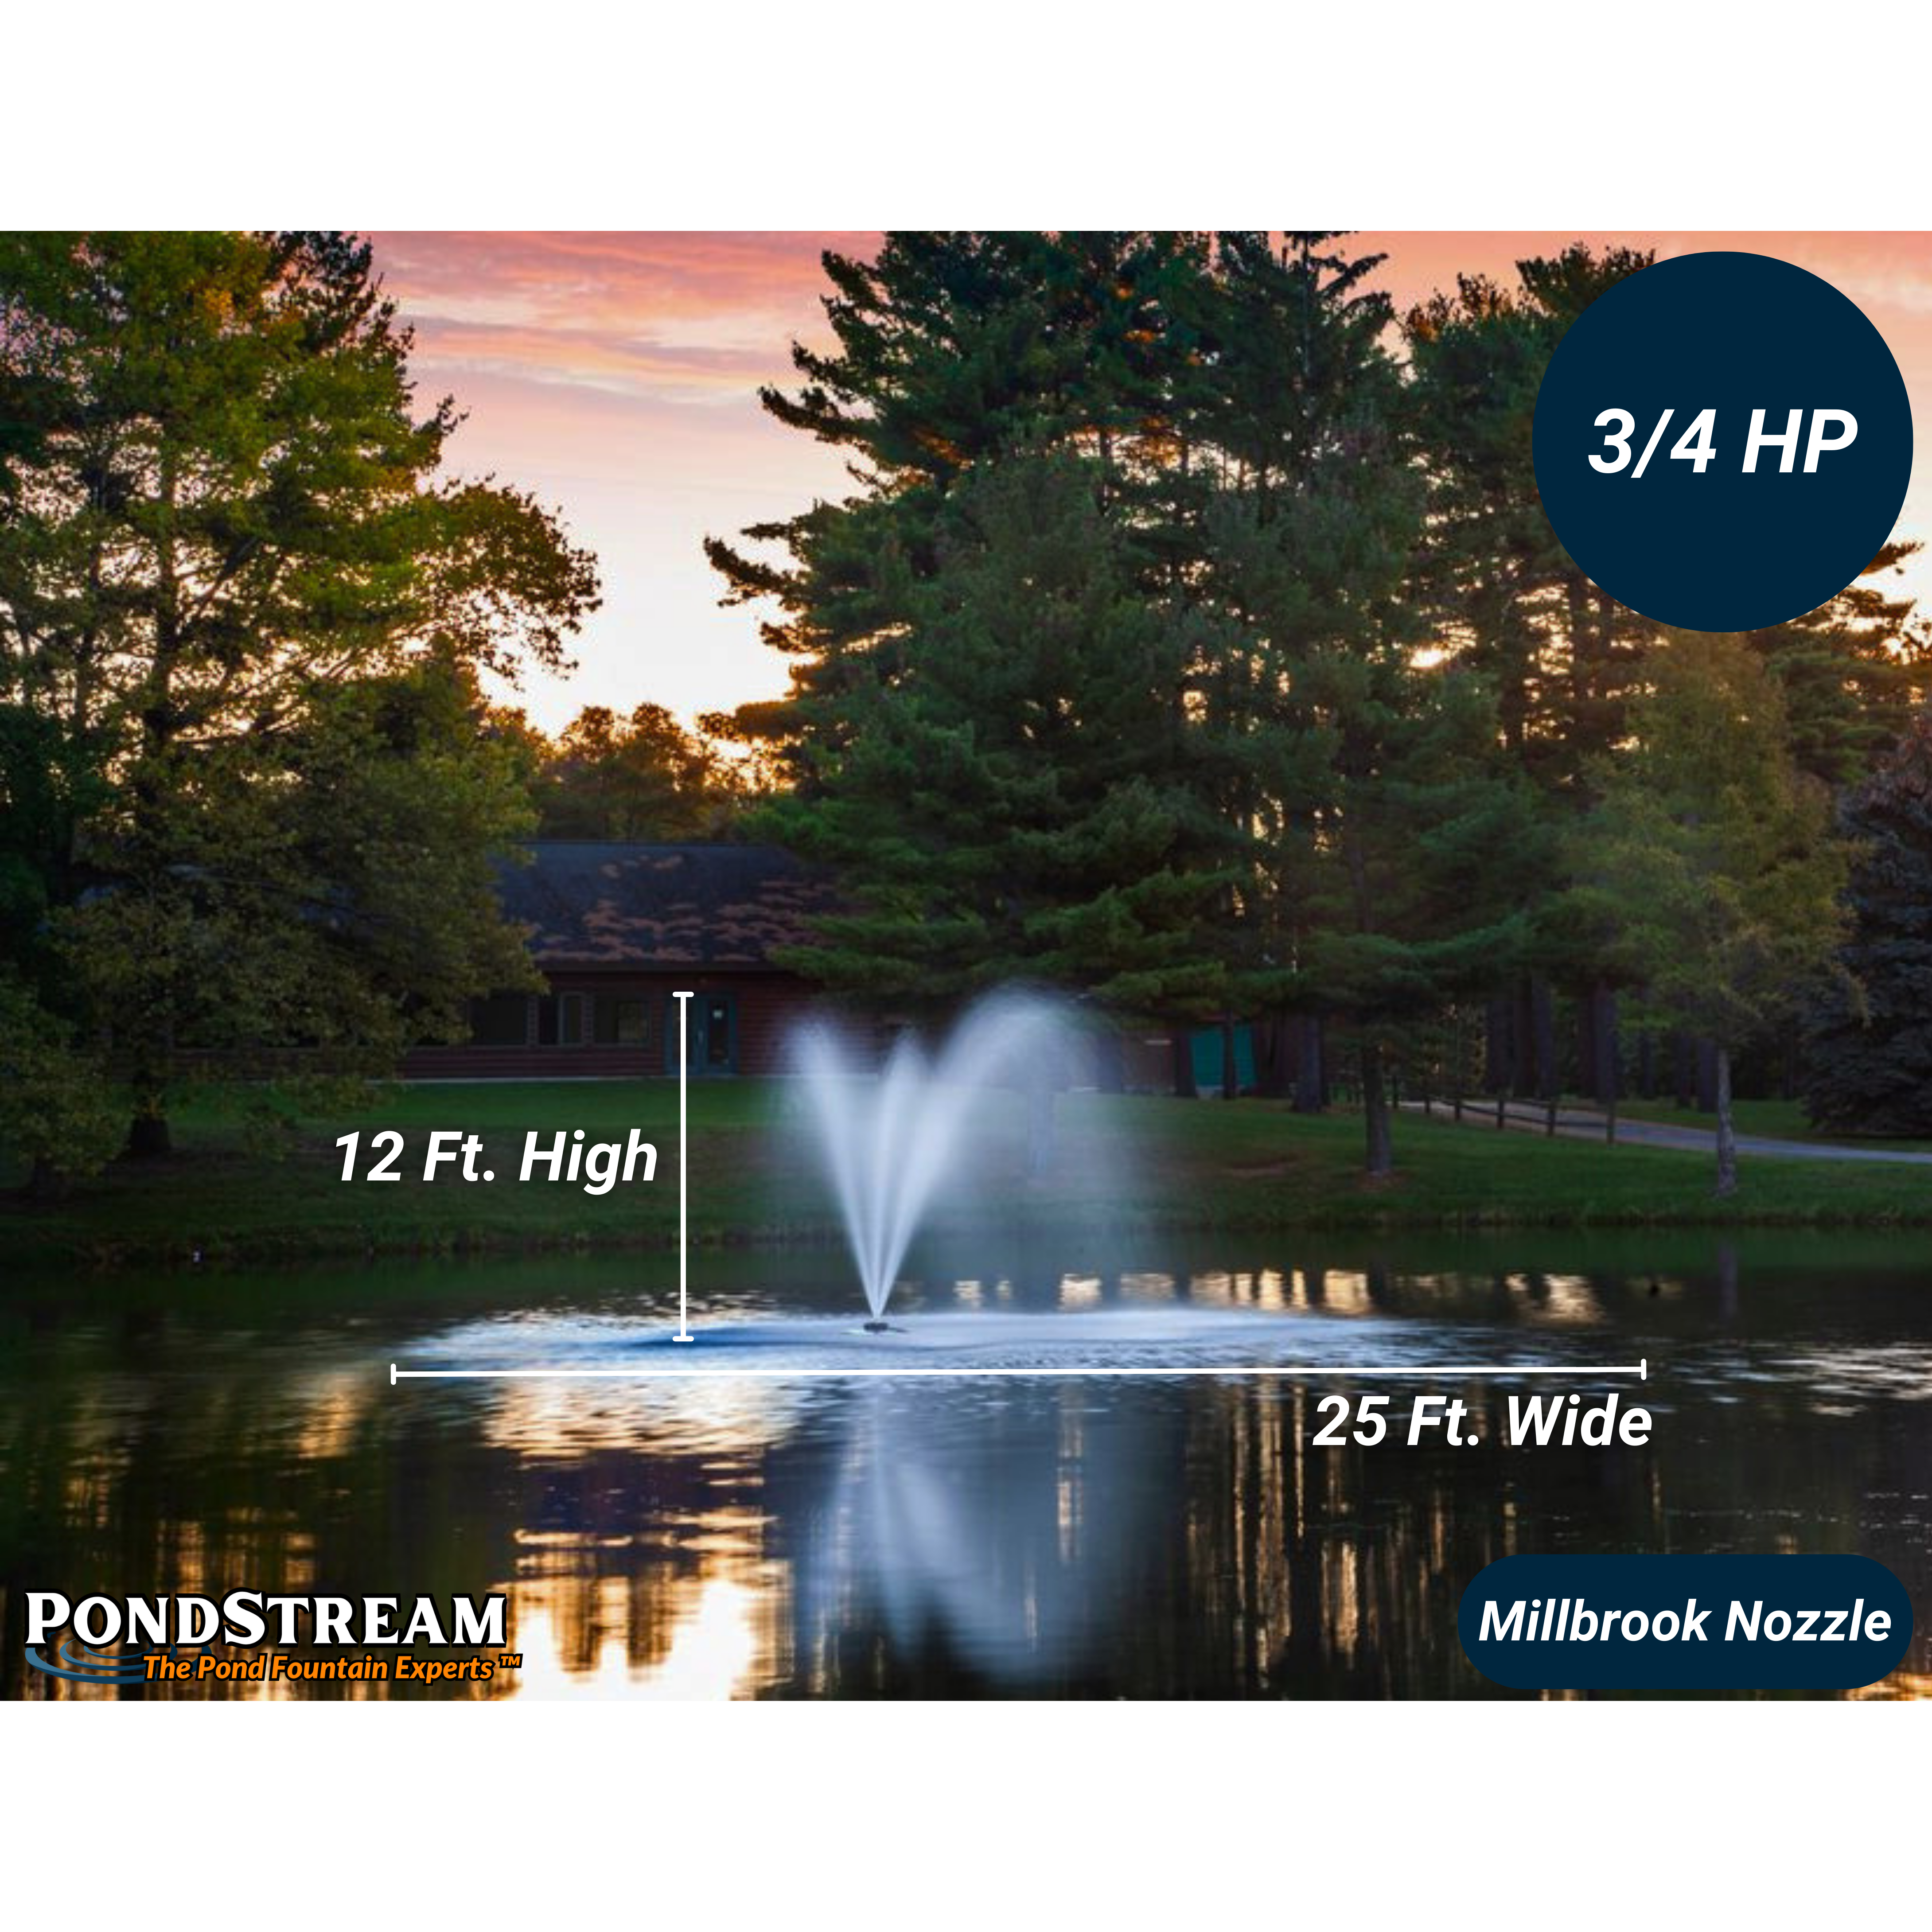 Scott Aerator Great Lakes Pond Fountain